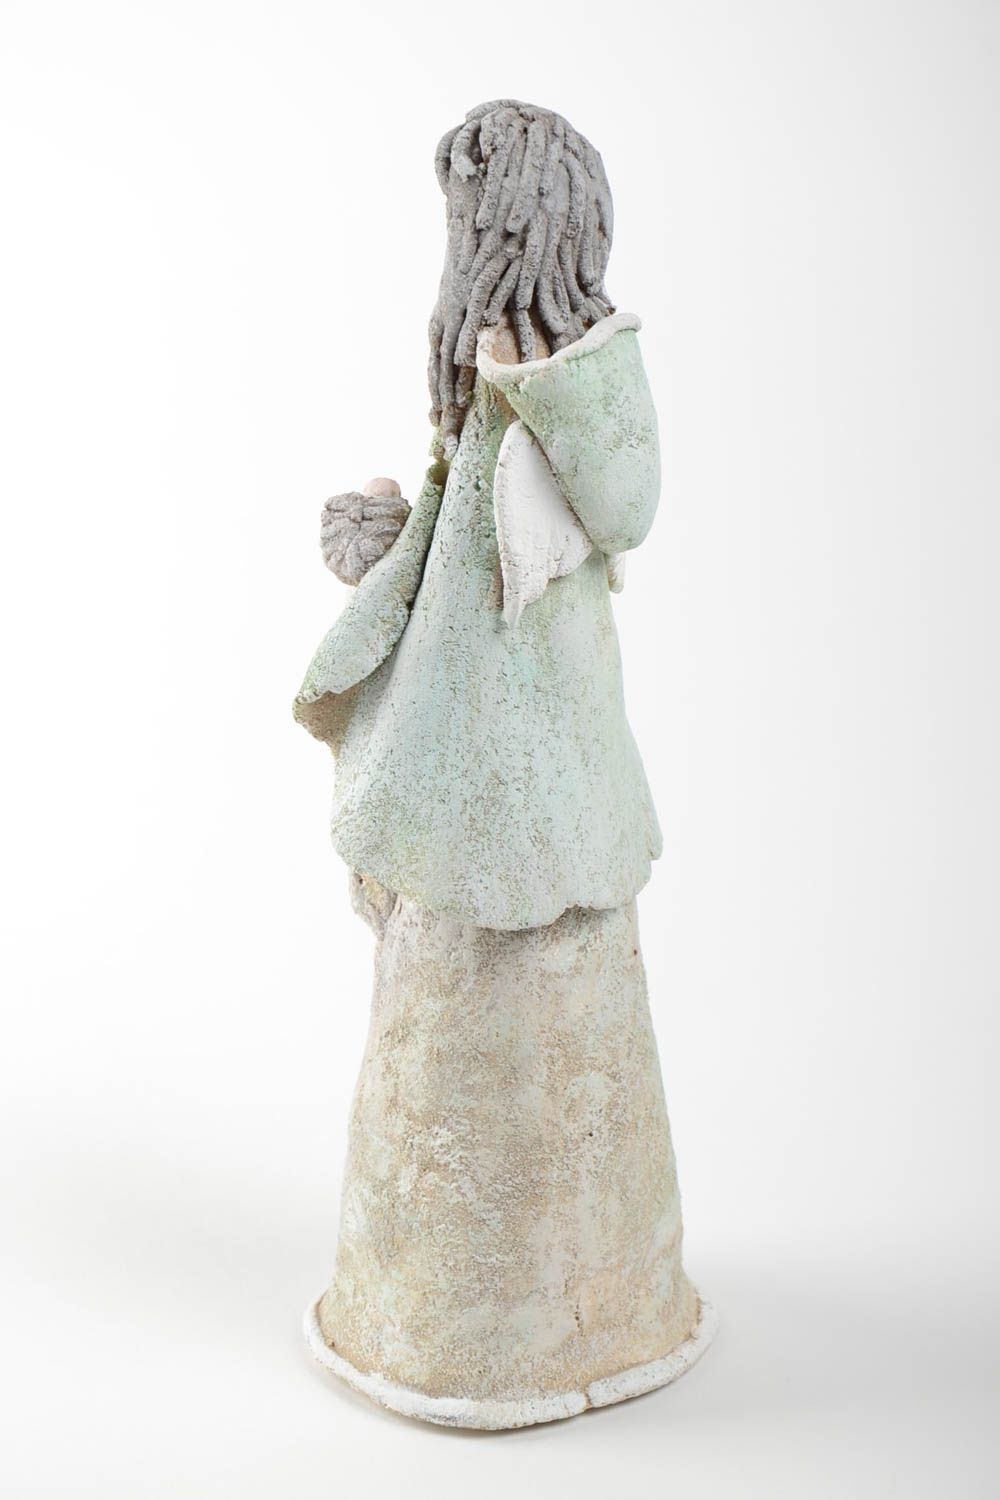 Miniature figurines angel statue homemade home decor gift ideas for women photo 4